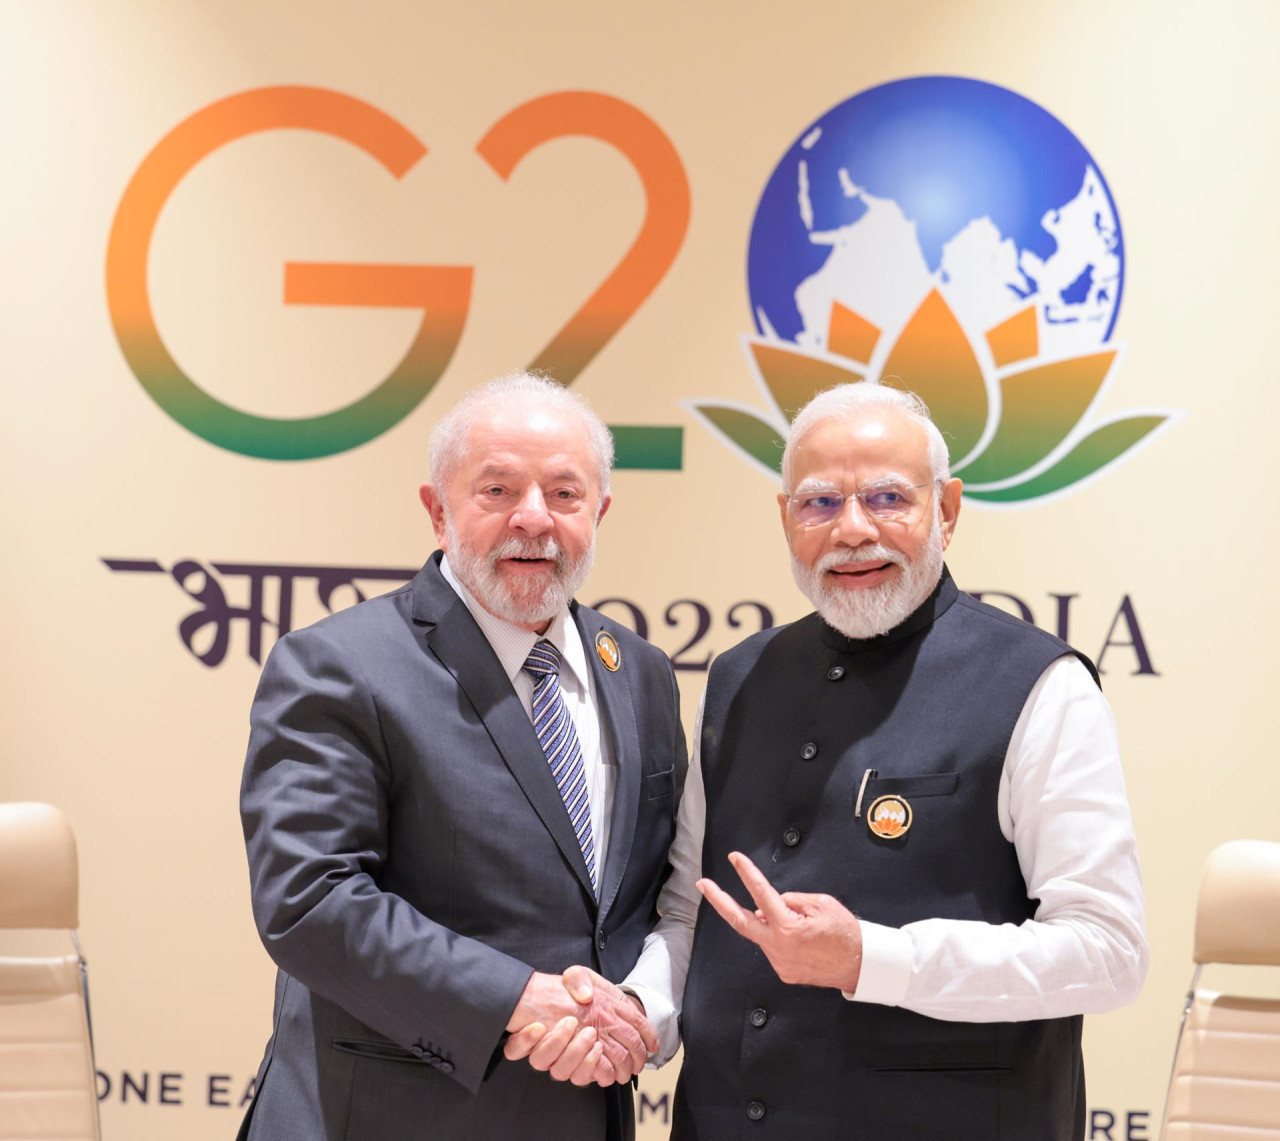 Cumbre del G20 en India, reunión de mandatarios. Foto: EFE.